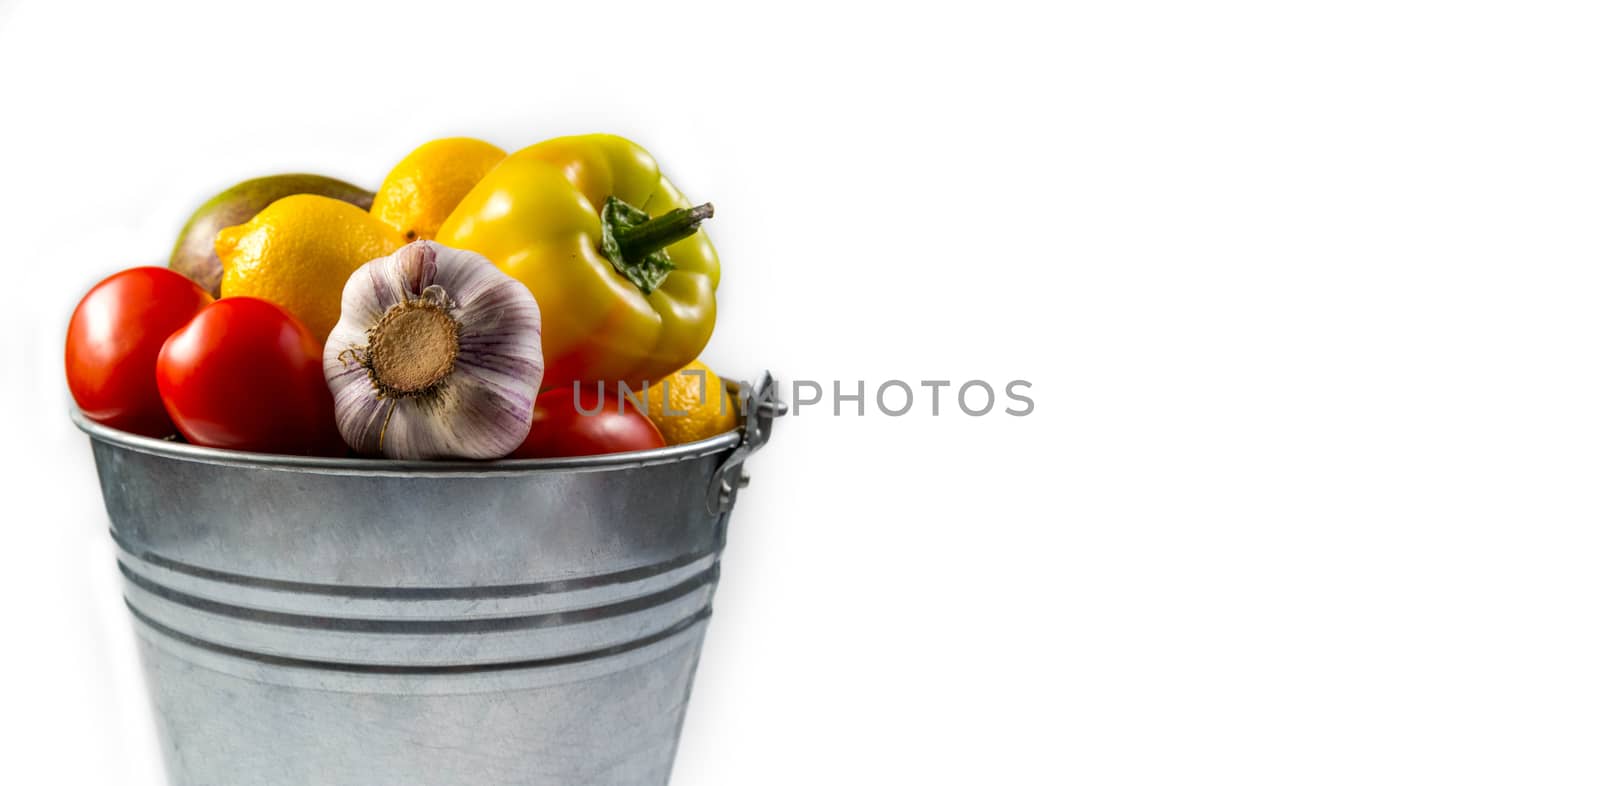 .Aluminum bucket with assortment of fresh vegetables on white background by galinasharapova